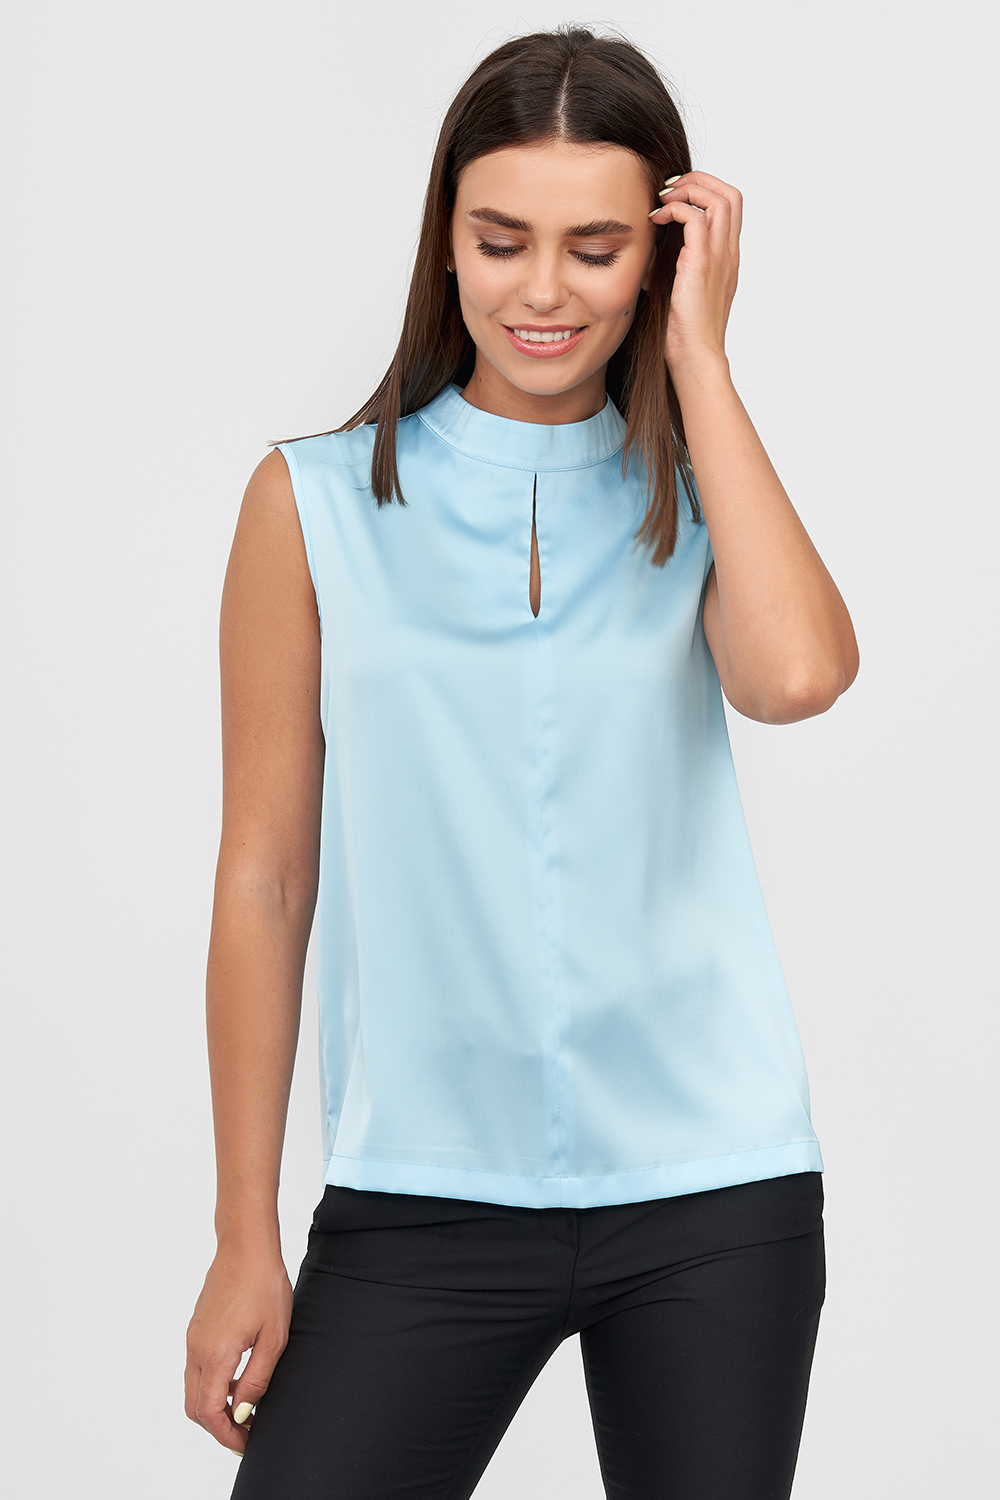 Шелковая блуза без рукавов голубого цвета